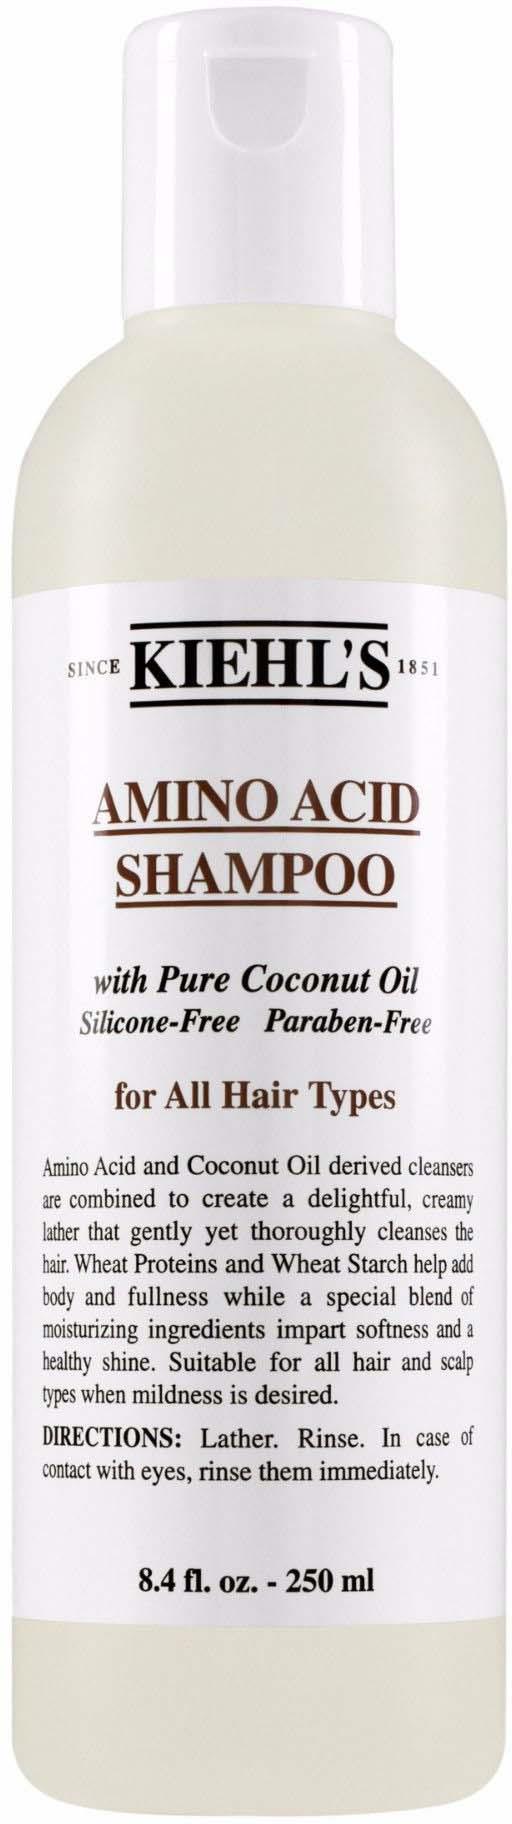 Kiehl's Amino Acid Hair Care Shampoo 250 ml 